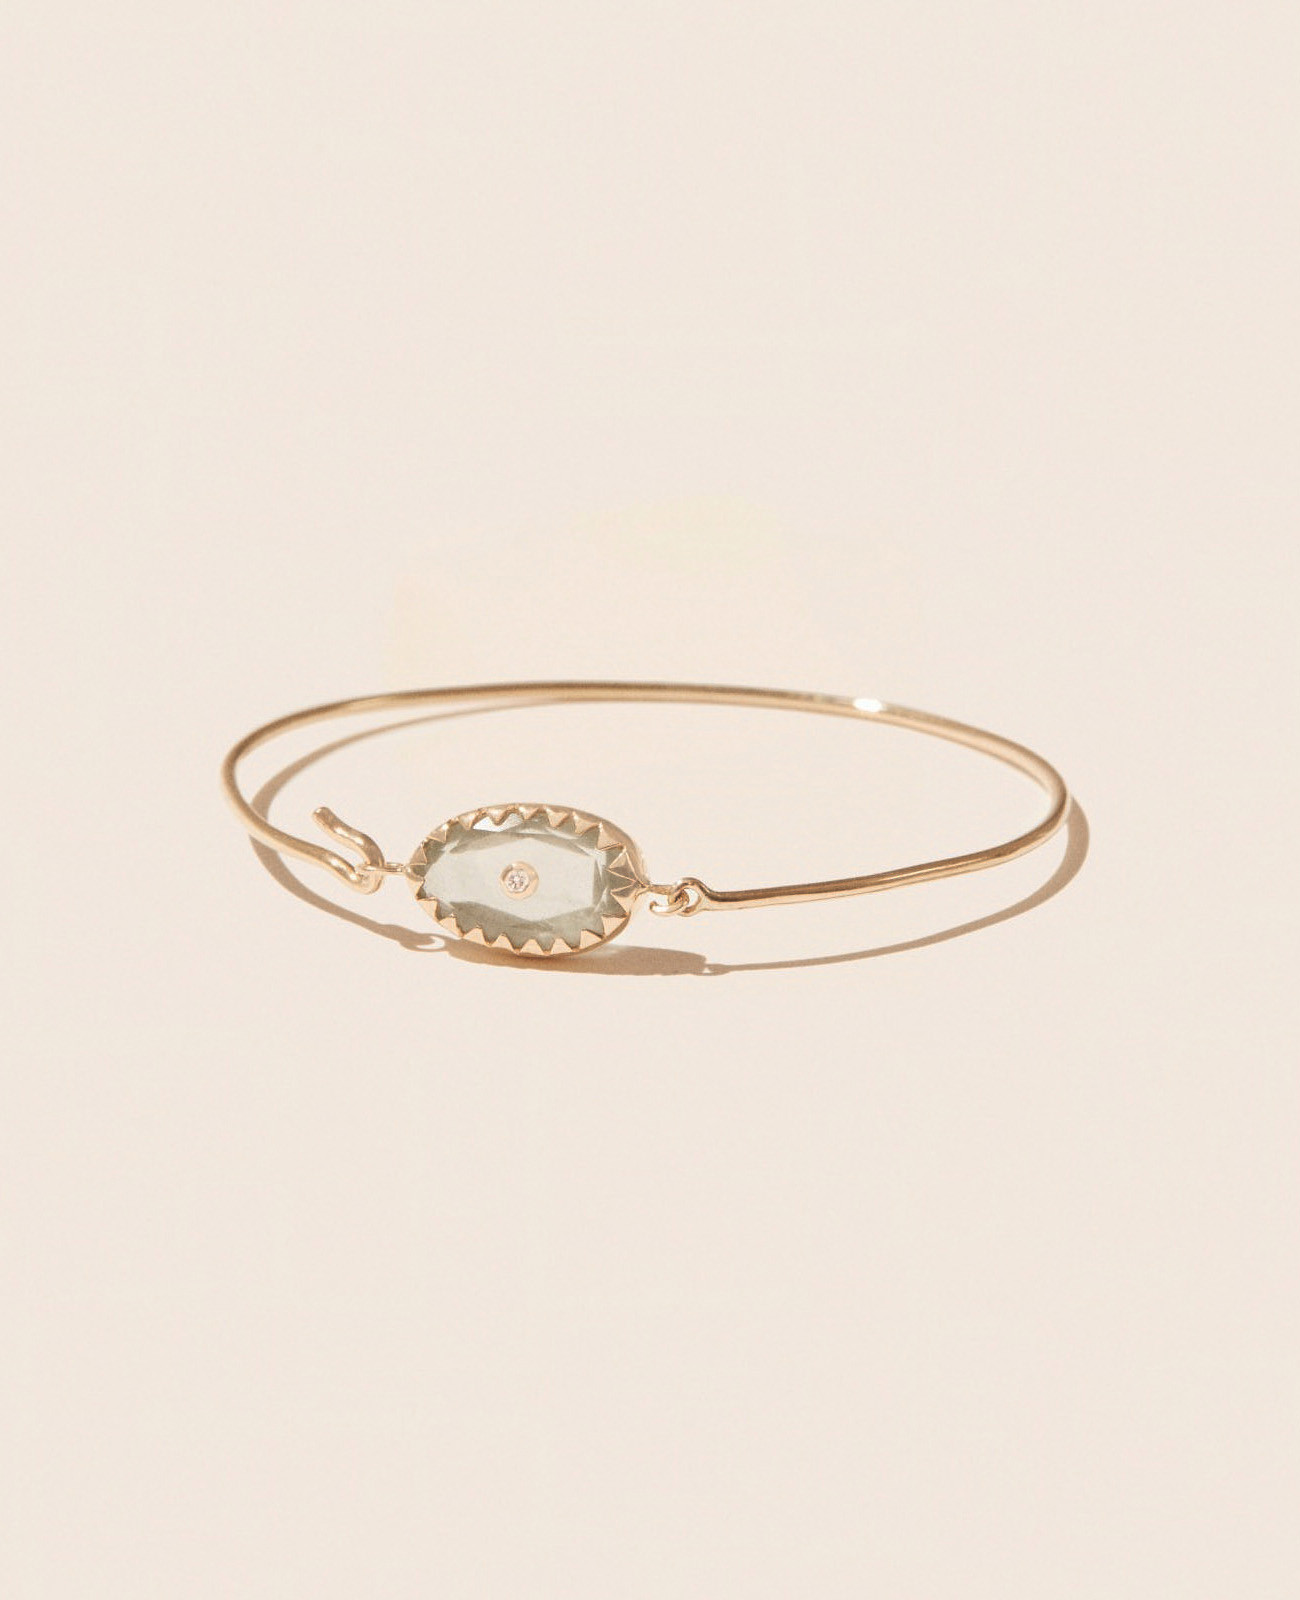 ORSO AQUAMARINE bracelet pascale monvoisin jewelry paris